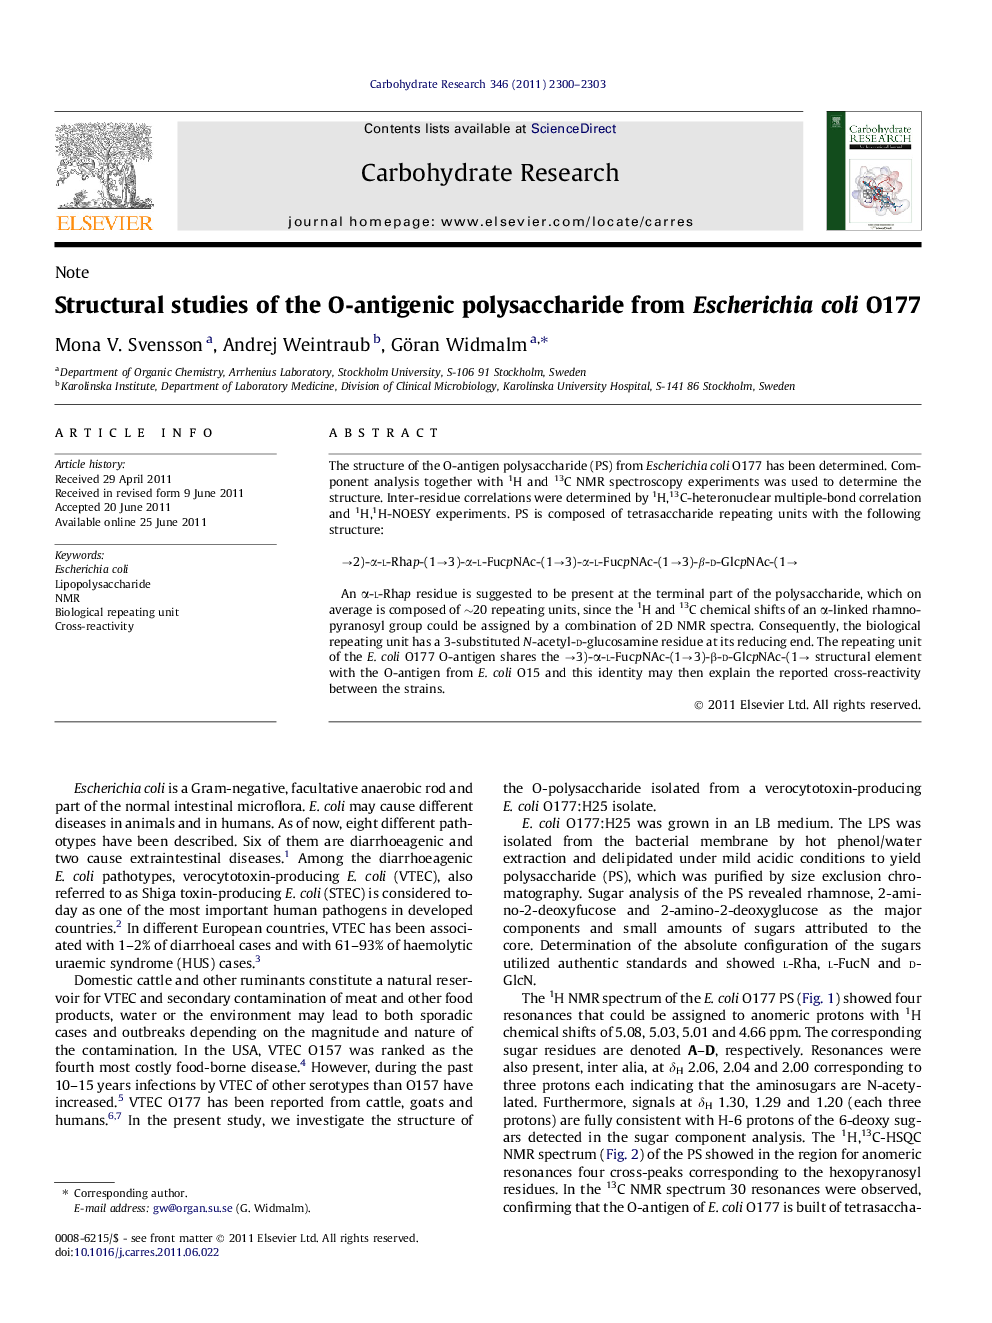 Structural studies of the O-antigenic polysaccharide from Escherichia coli O177